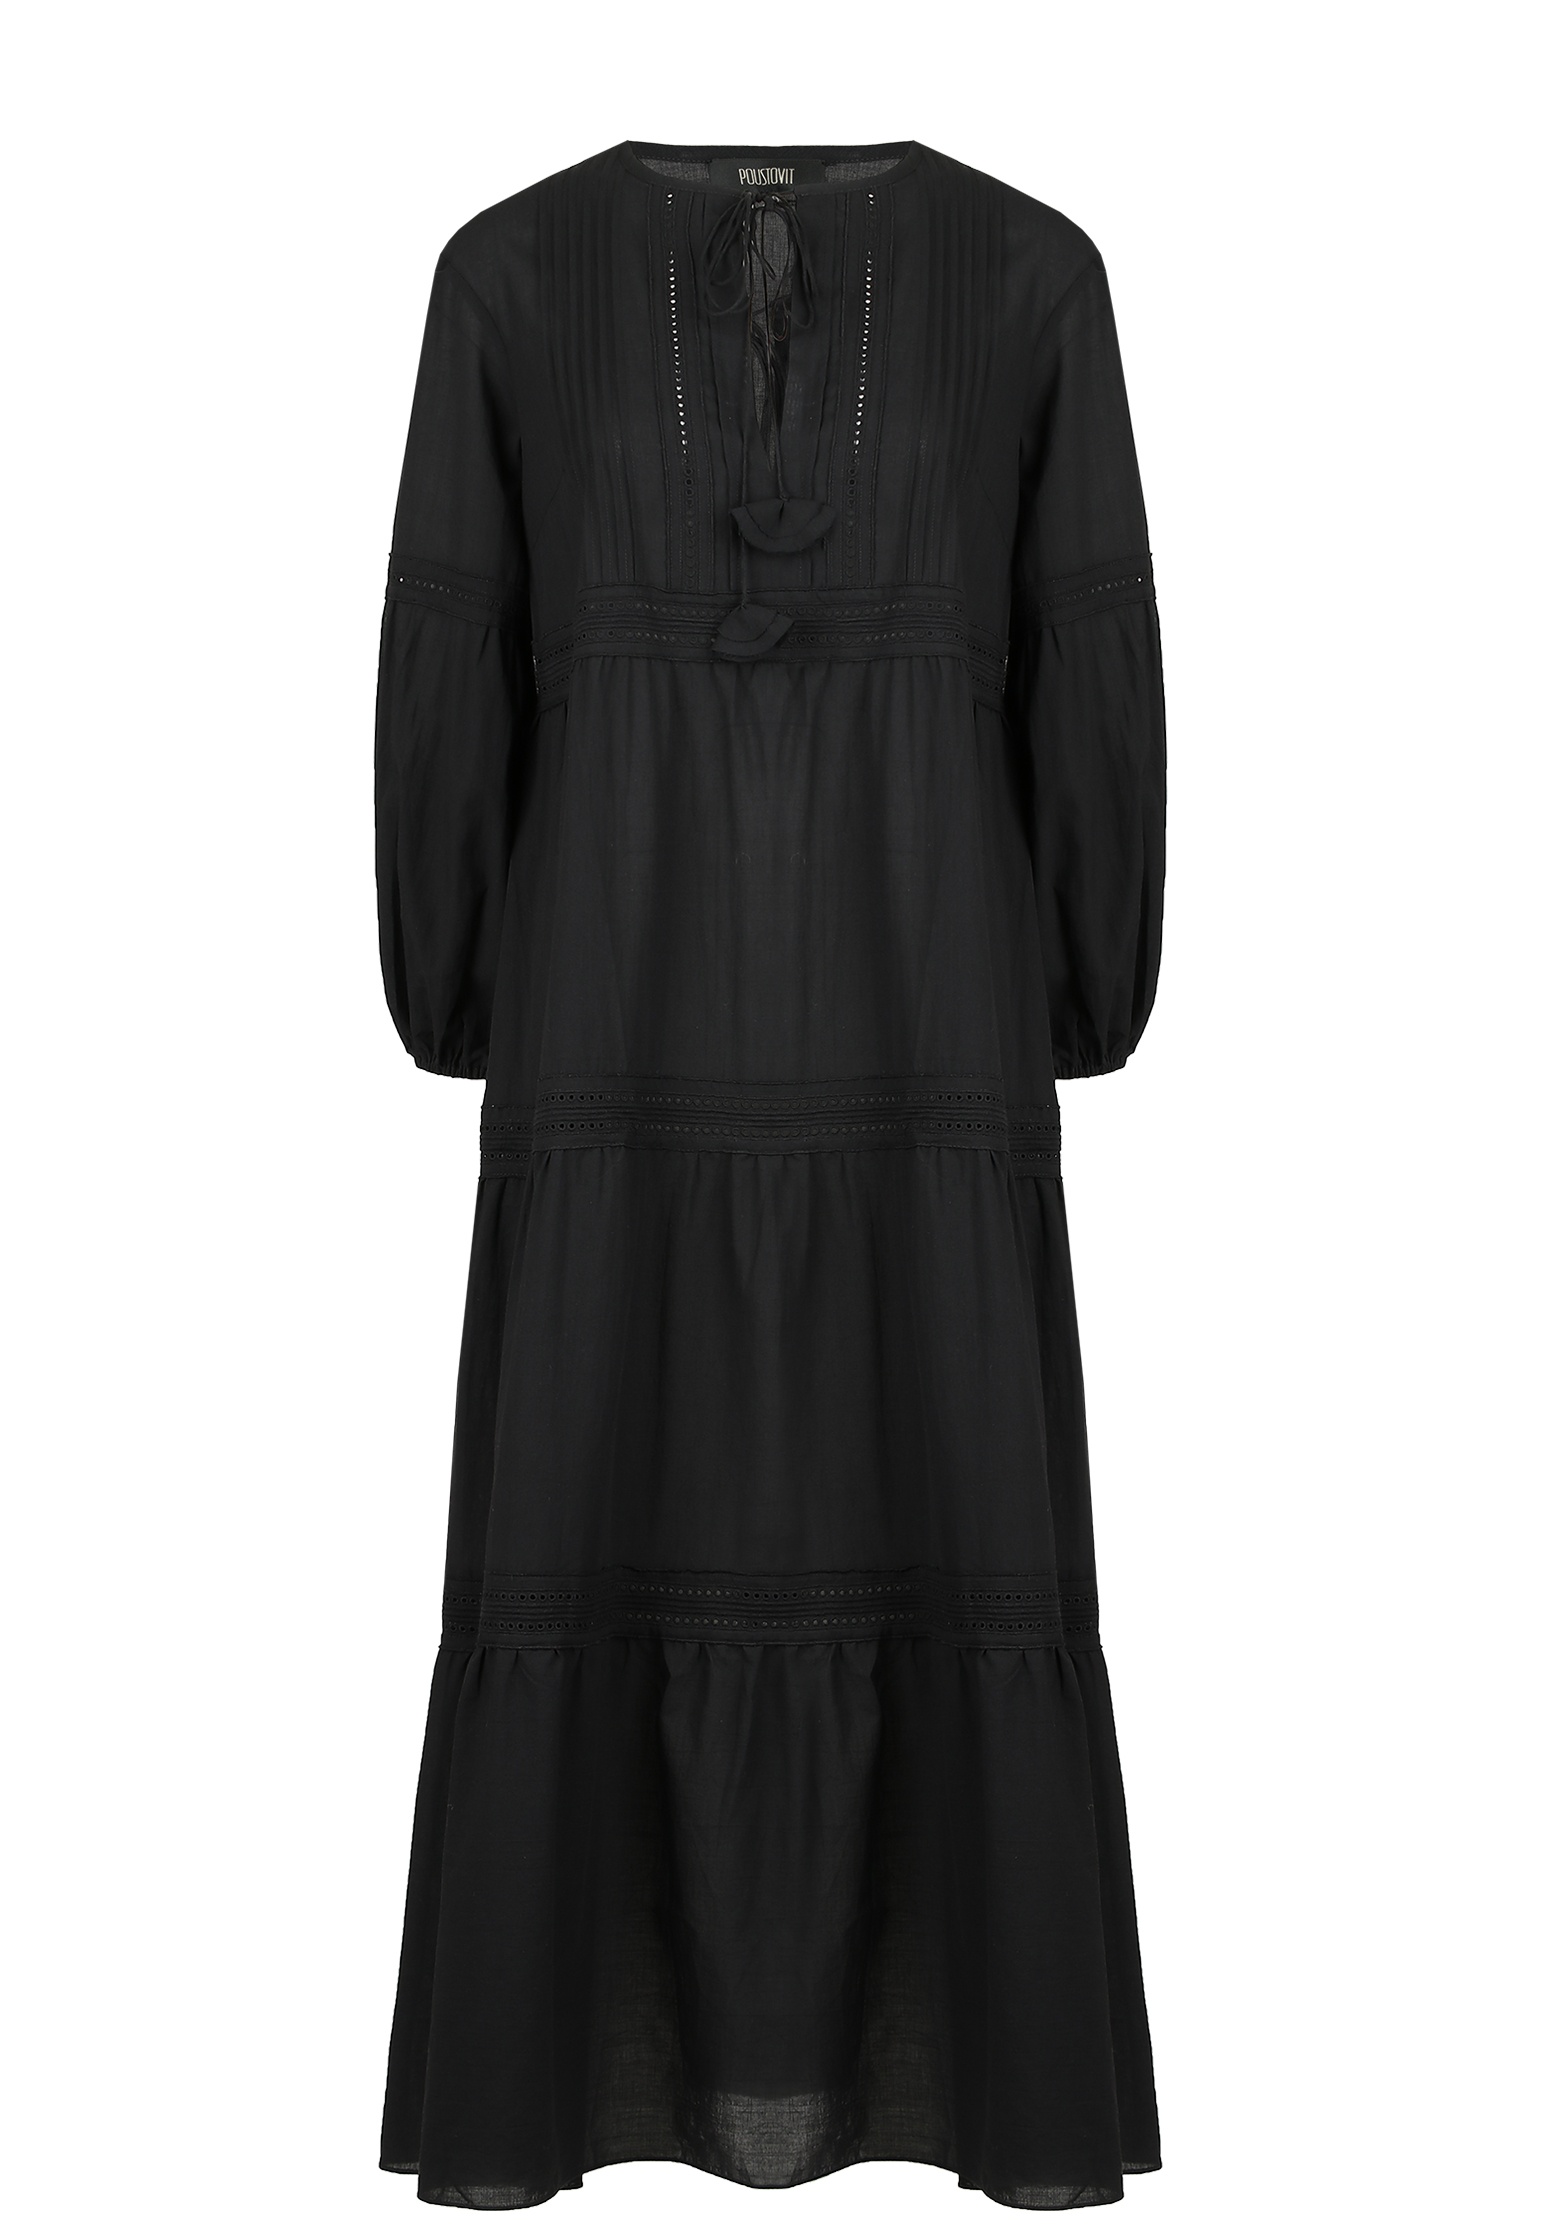 Платье женское Poustovit 139083 черное 40 IT